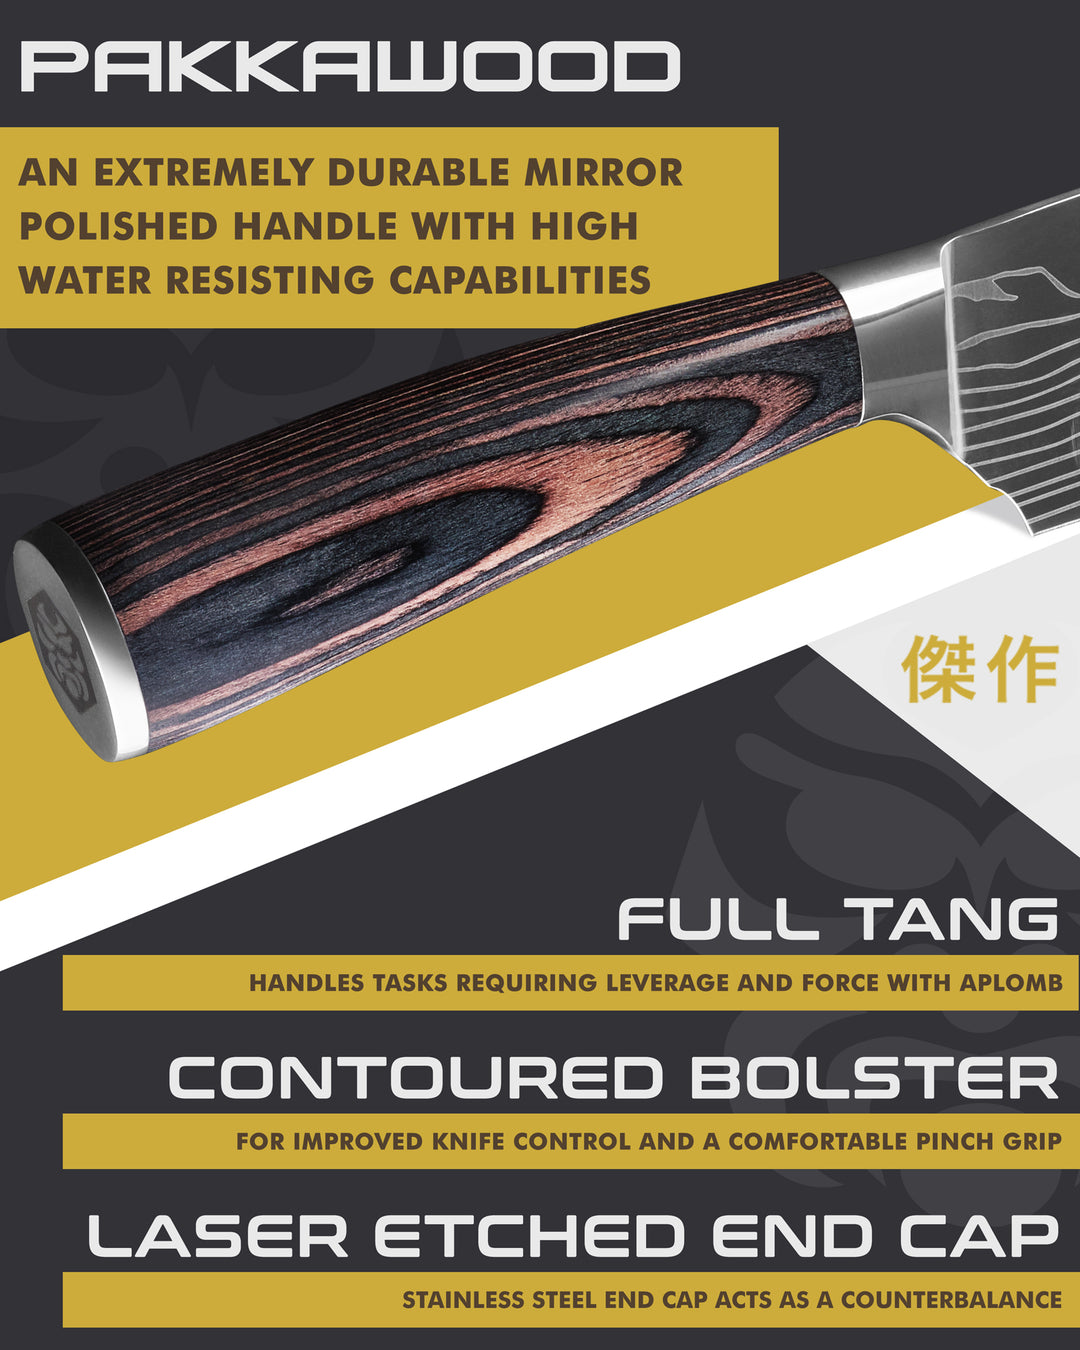 Kessaku Samurai Santoku Knife handle features: Pakkawood handle, full tang, contoured bolster, laser etched end cap